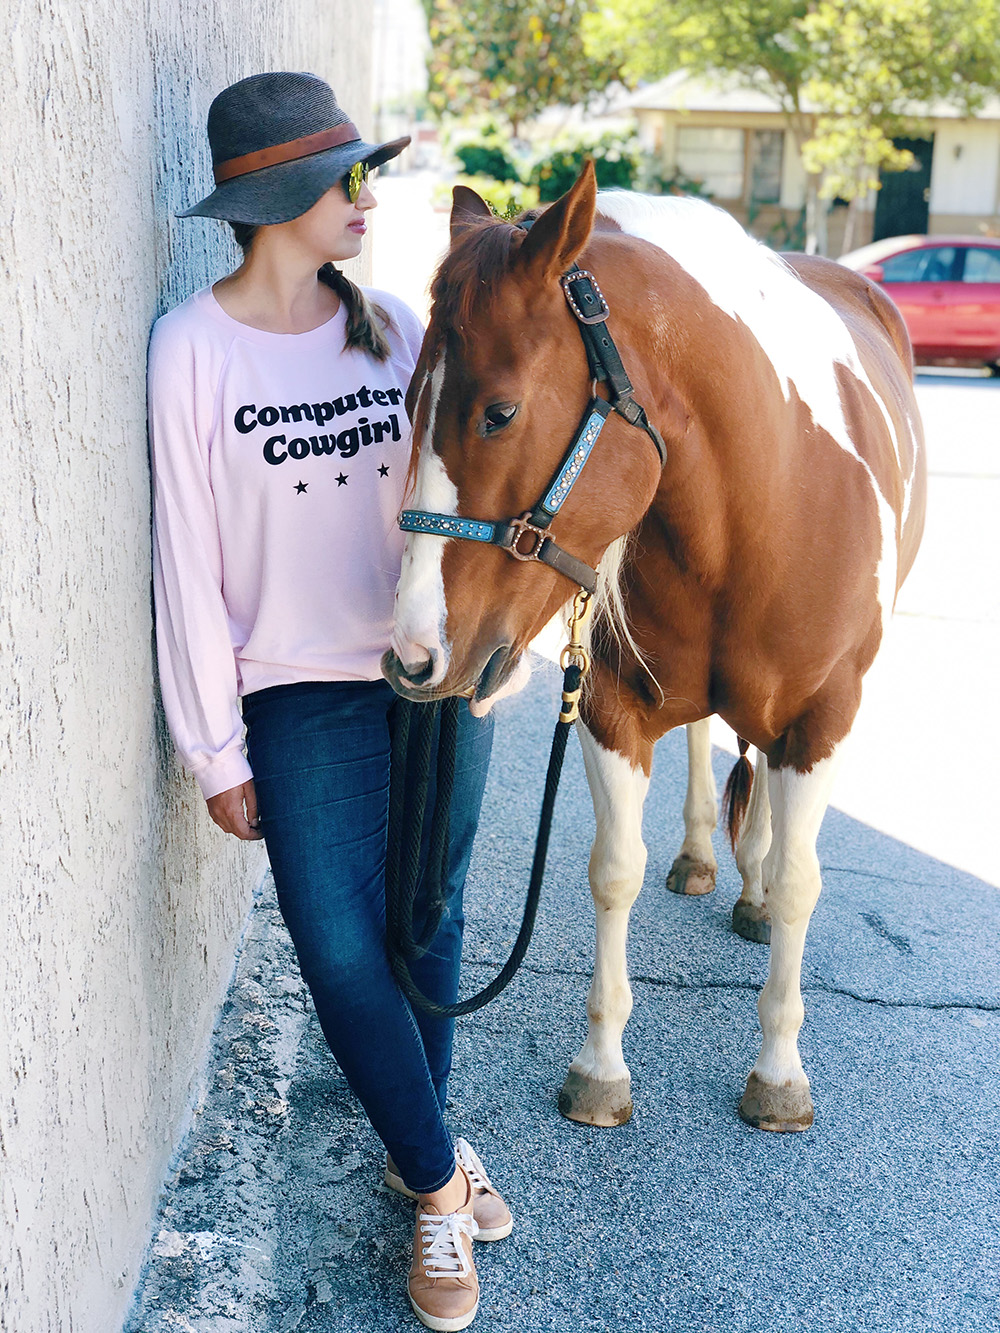 Computer Cowgirl - Raquel from Horses & Heels